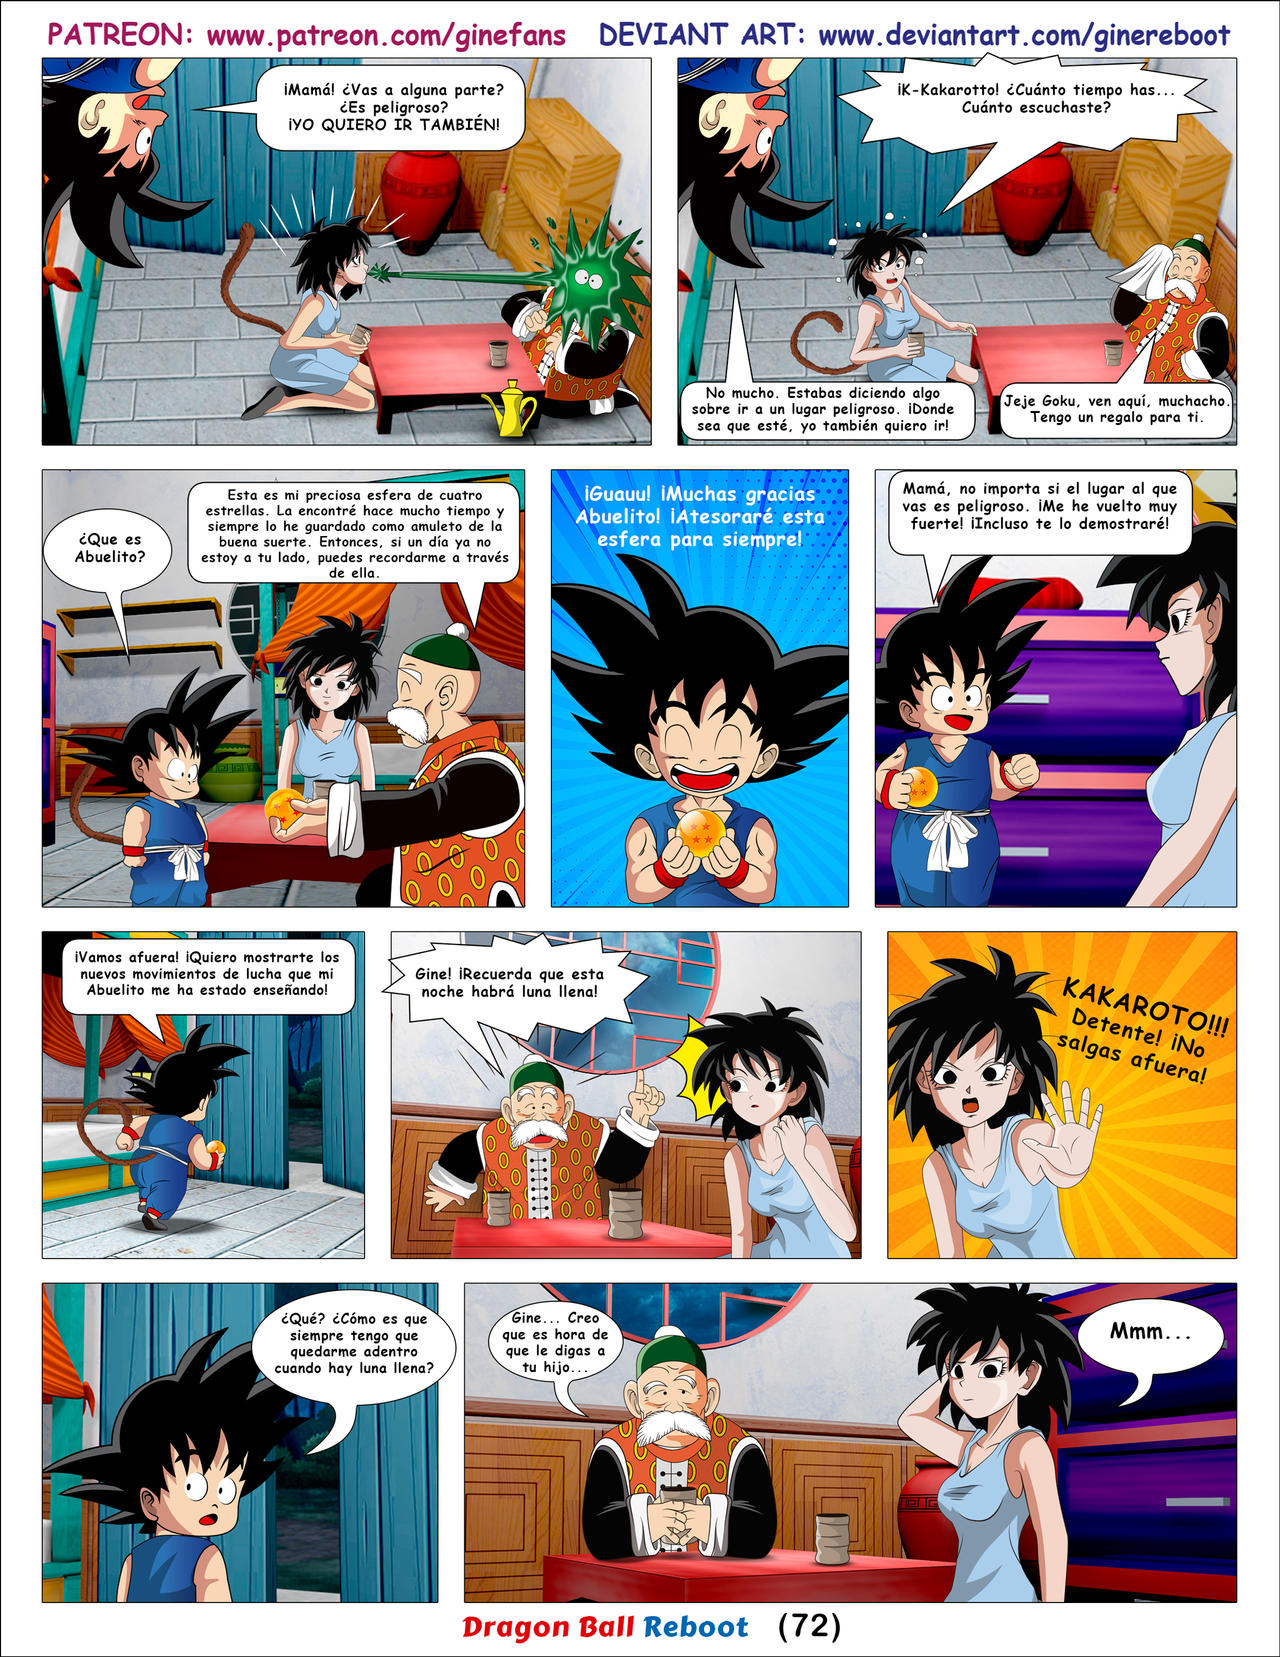 72 - Dragon Ball Reboot Comic 2 ESPANOL by GineReboot on DeviantArt